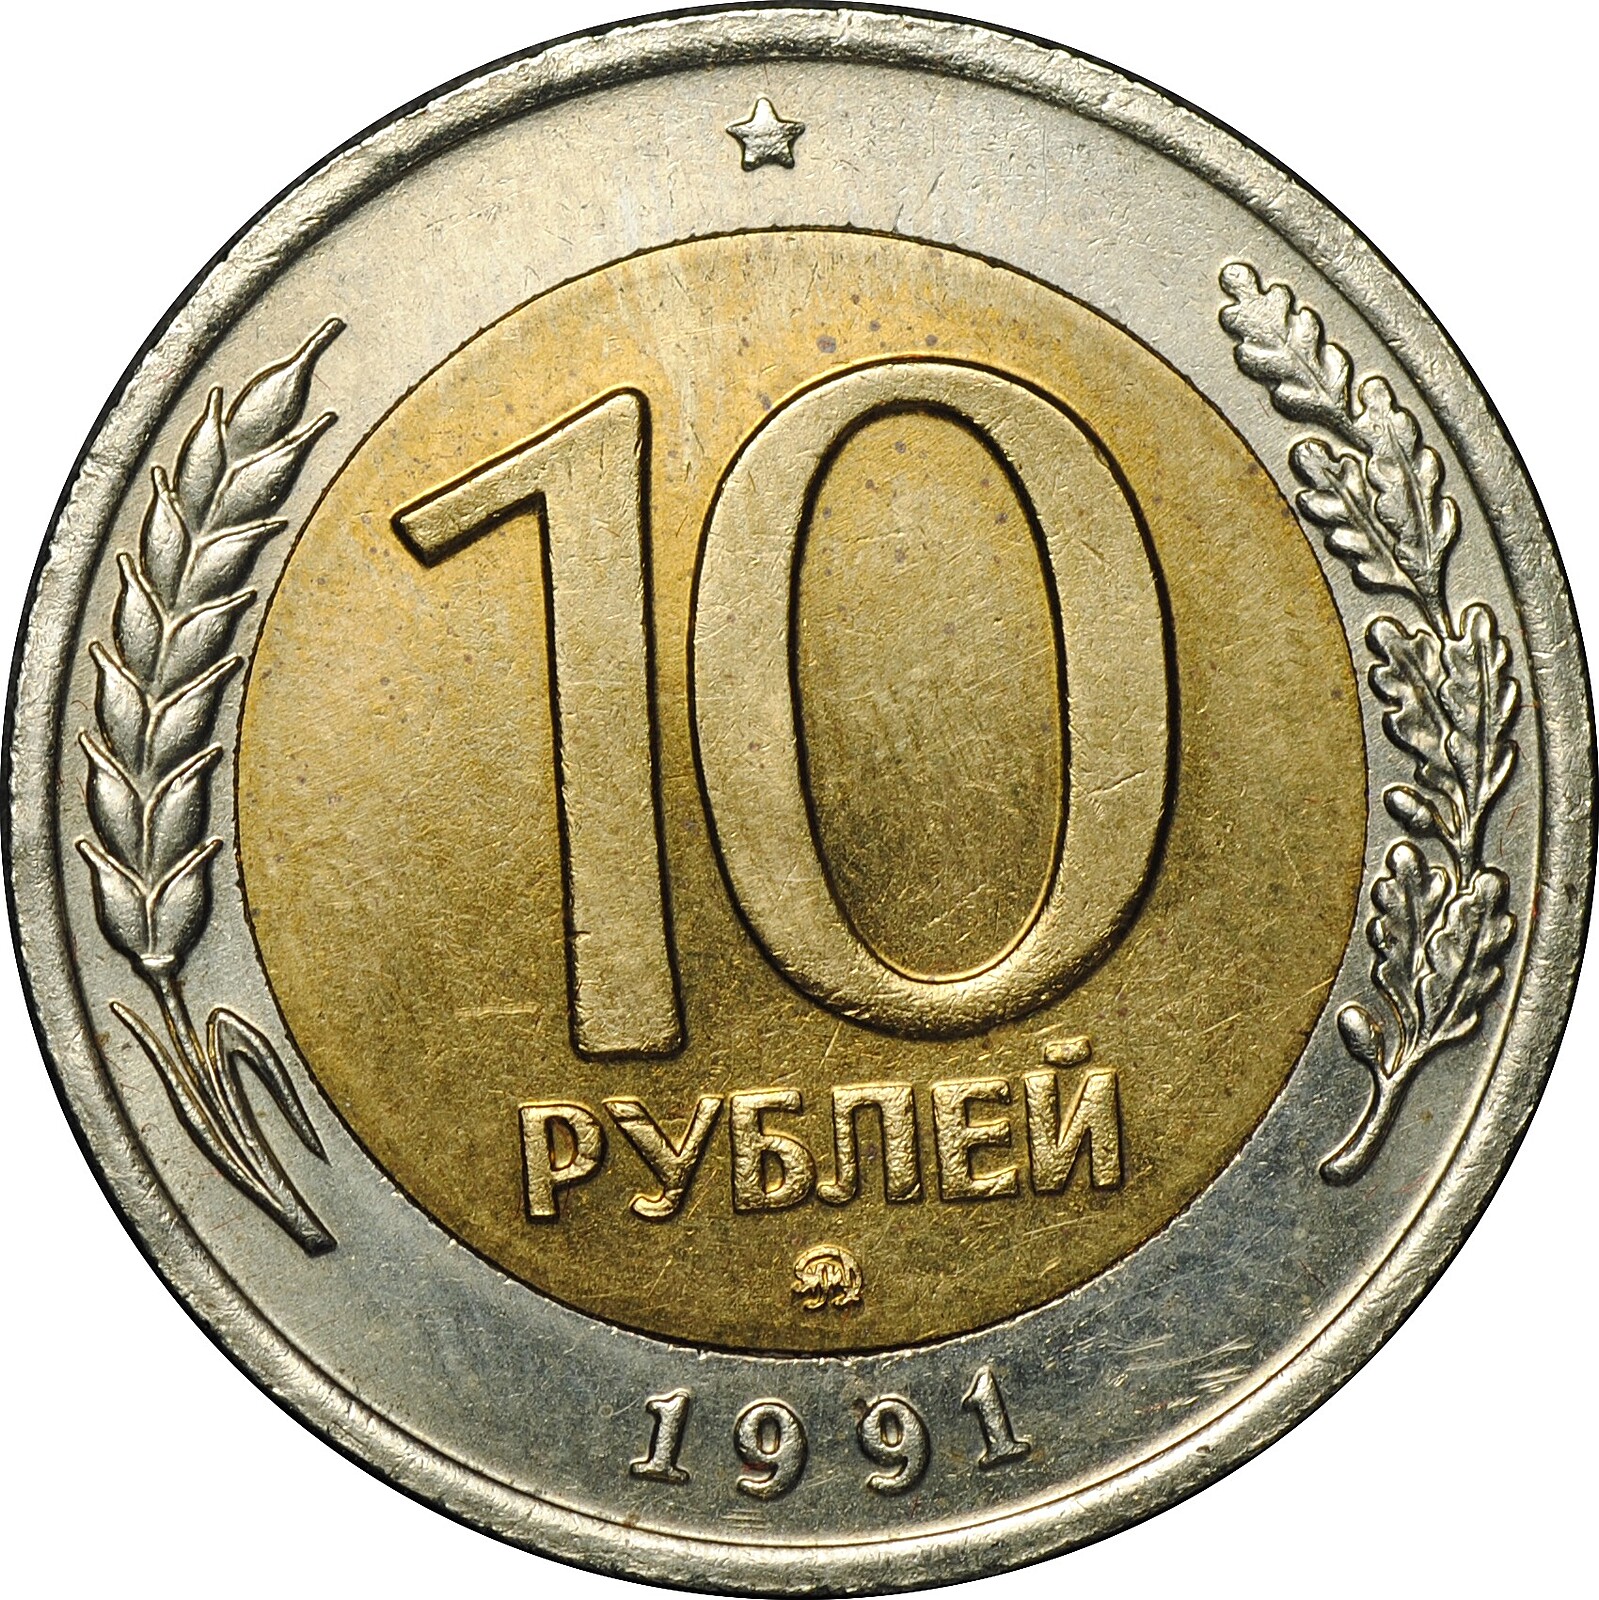 10 рублей в 60 годы. 10 Рублей 1991 ММД. 10 Рублей 1991 года ЛМД. 10 Рублей 1991 года Биметалл ЛМД. 10 Рублей 1991 Биметалл ЛМД И ММД.